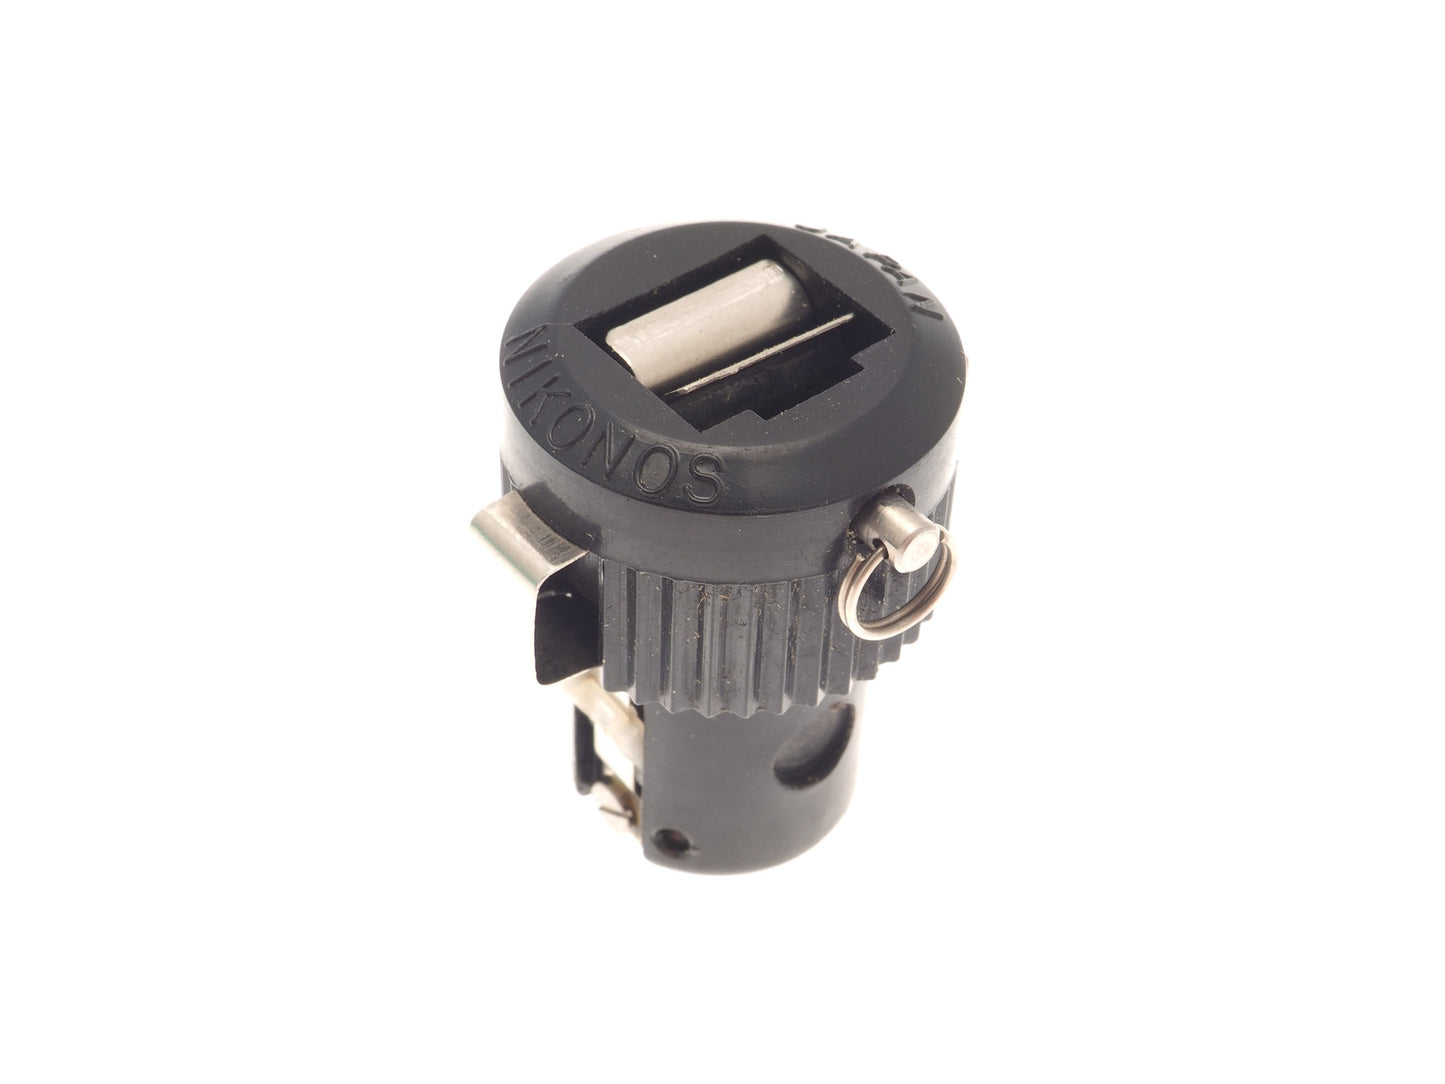 Nikon Flashbulb Adapter AG for Nikonos - Accessory